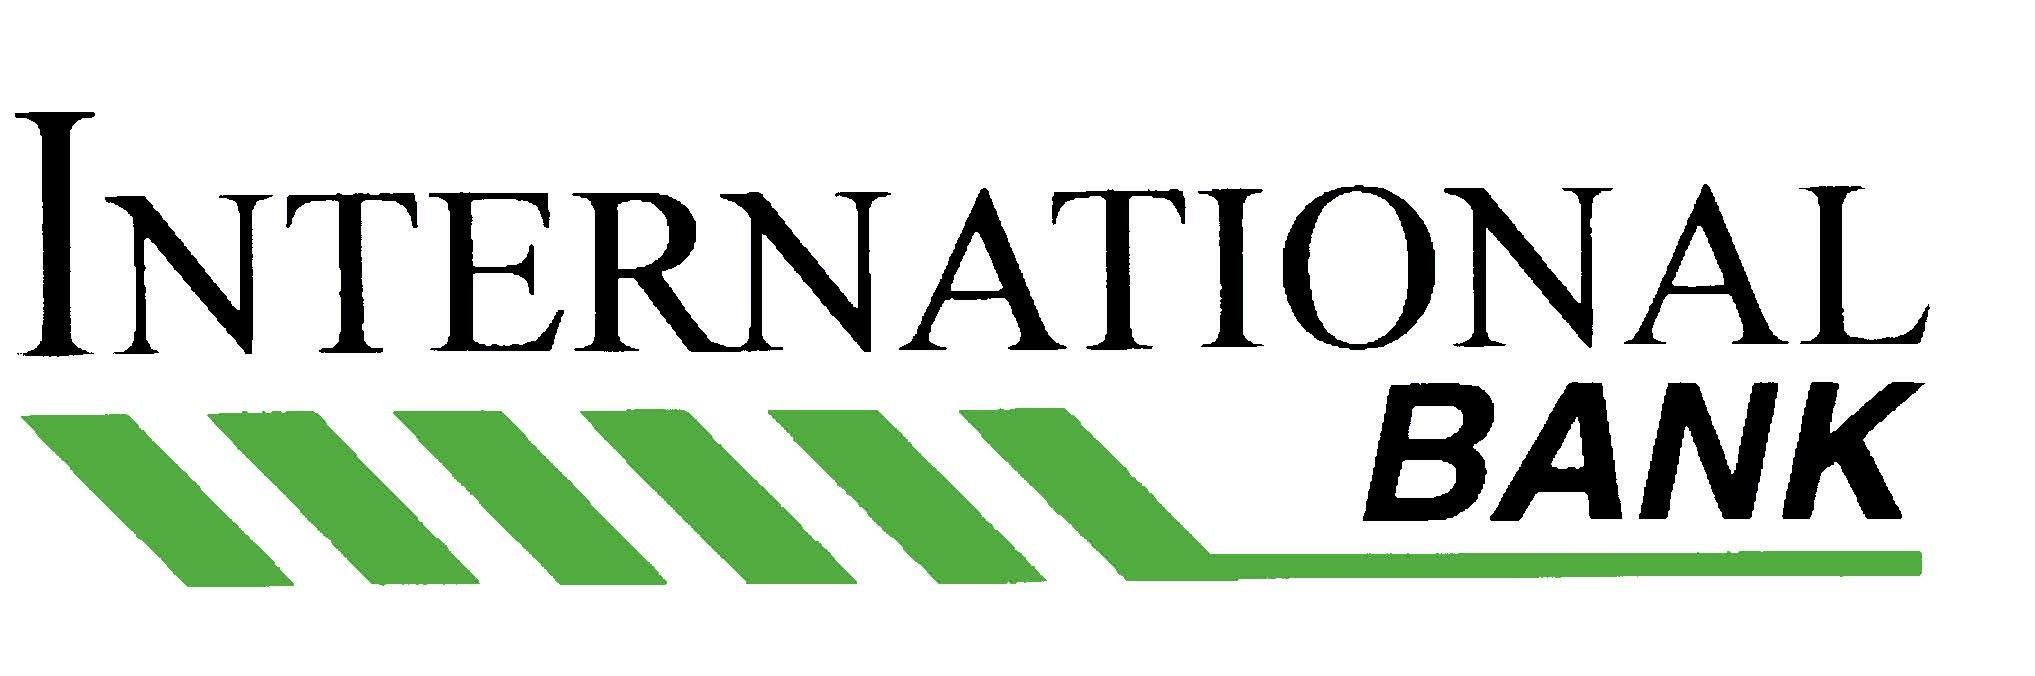 Generic Bank Logo - INTERNATIONAL BANKS CONTROL THE WORLD ECONOMY